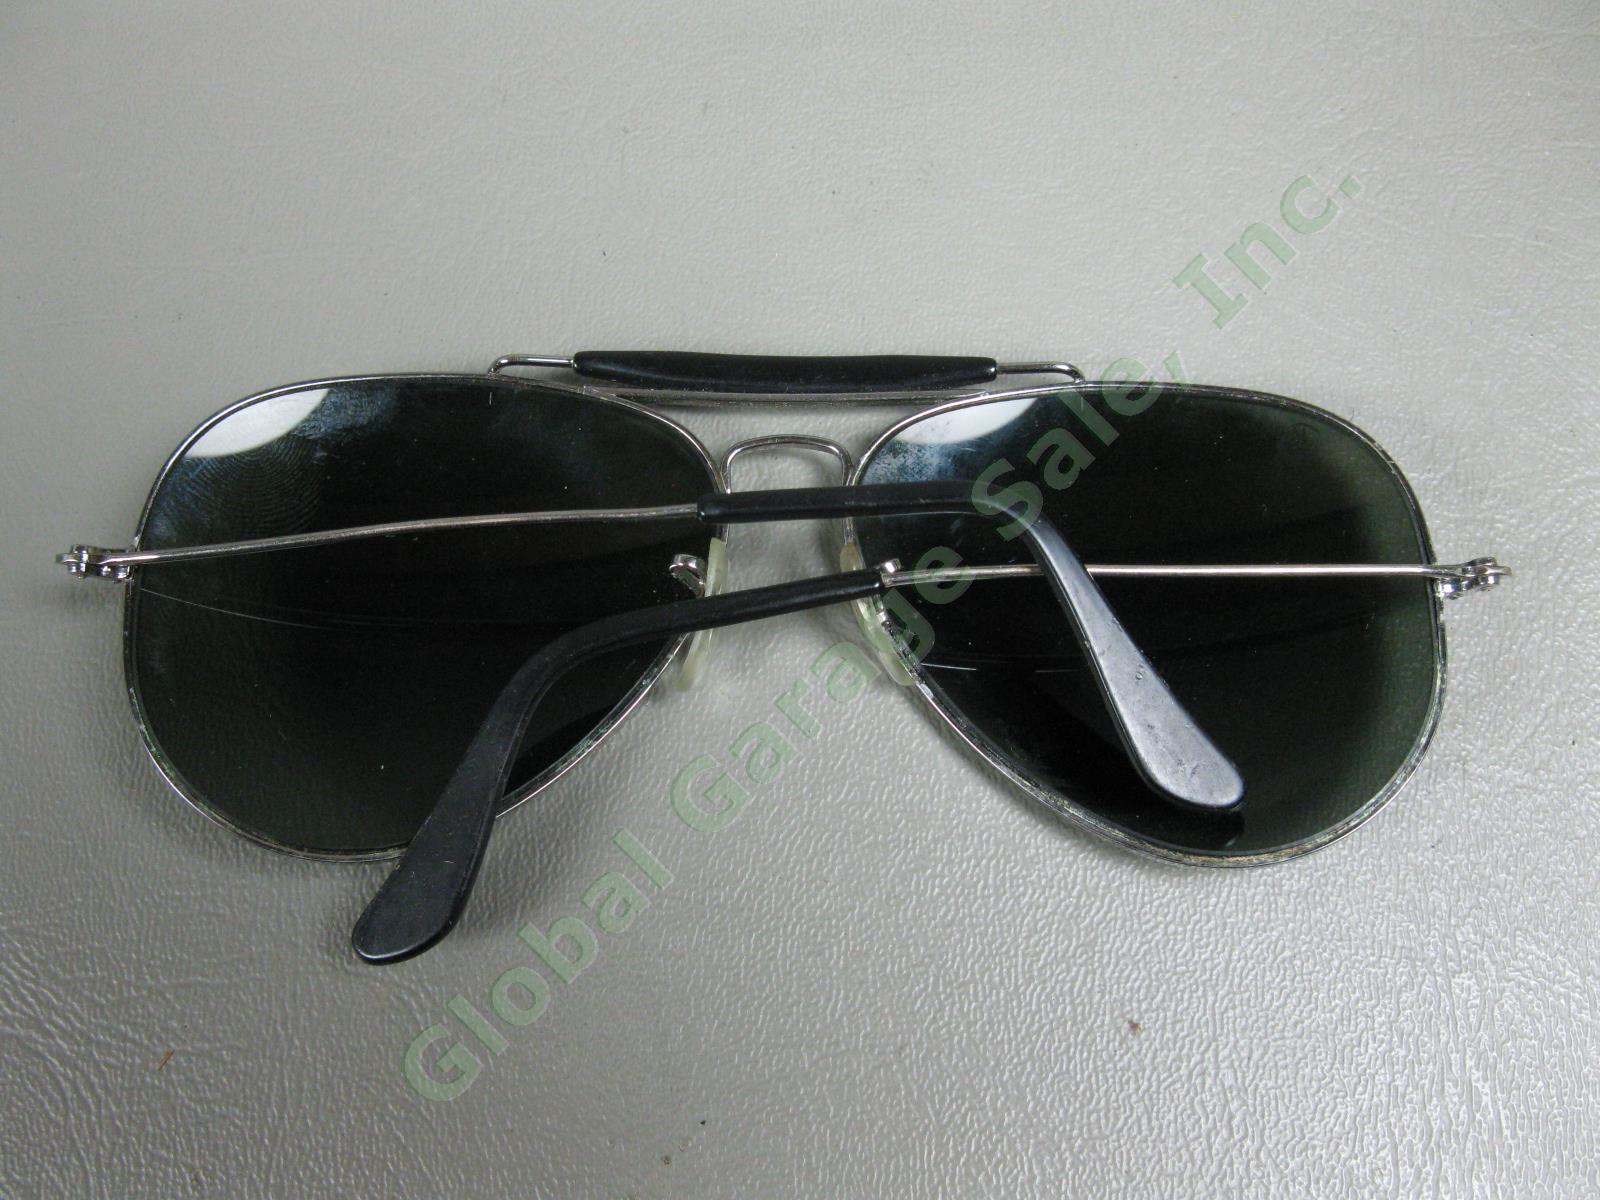 Vtg Bausch + Lomb Ray-Ban Large Aviator Sunglasses 62-14 Green Lenses w/ Case 8